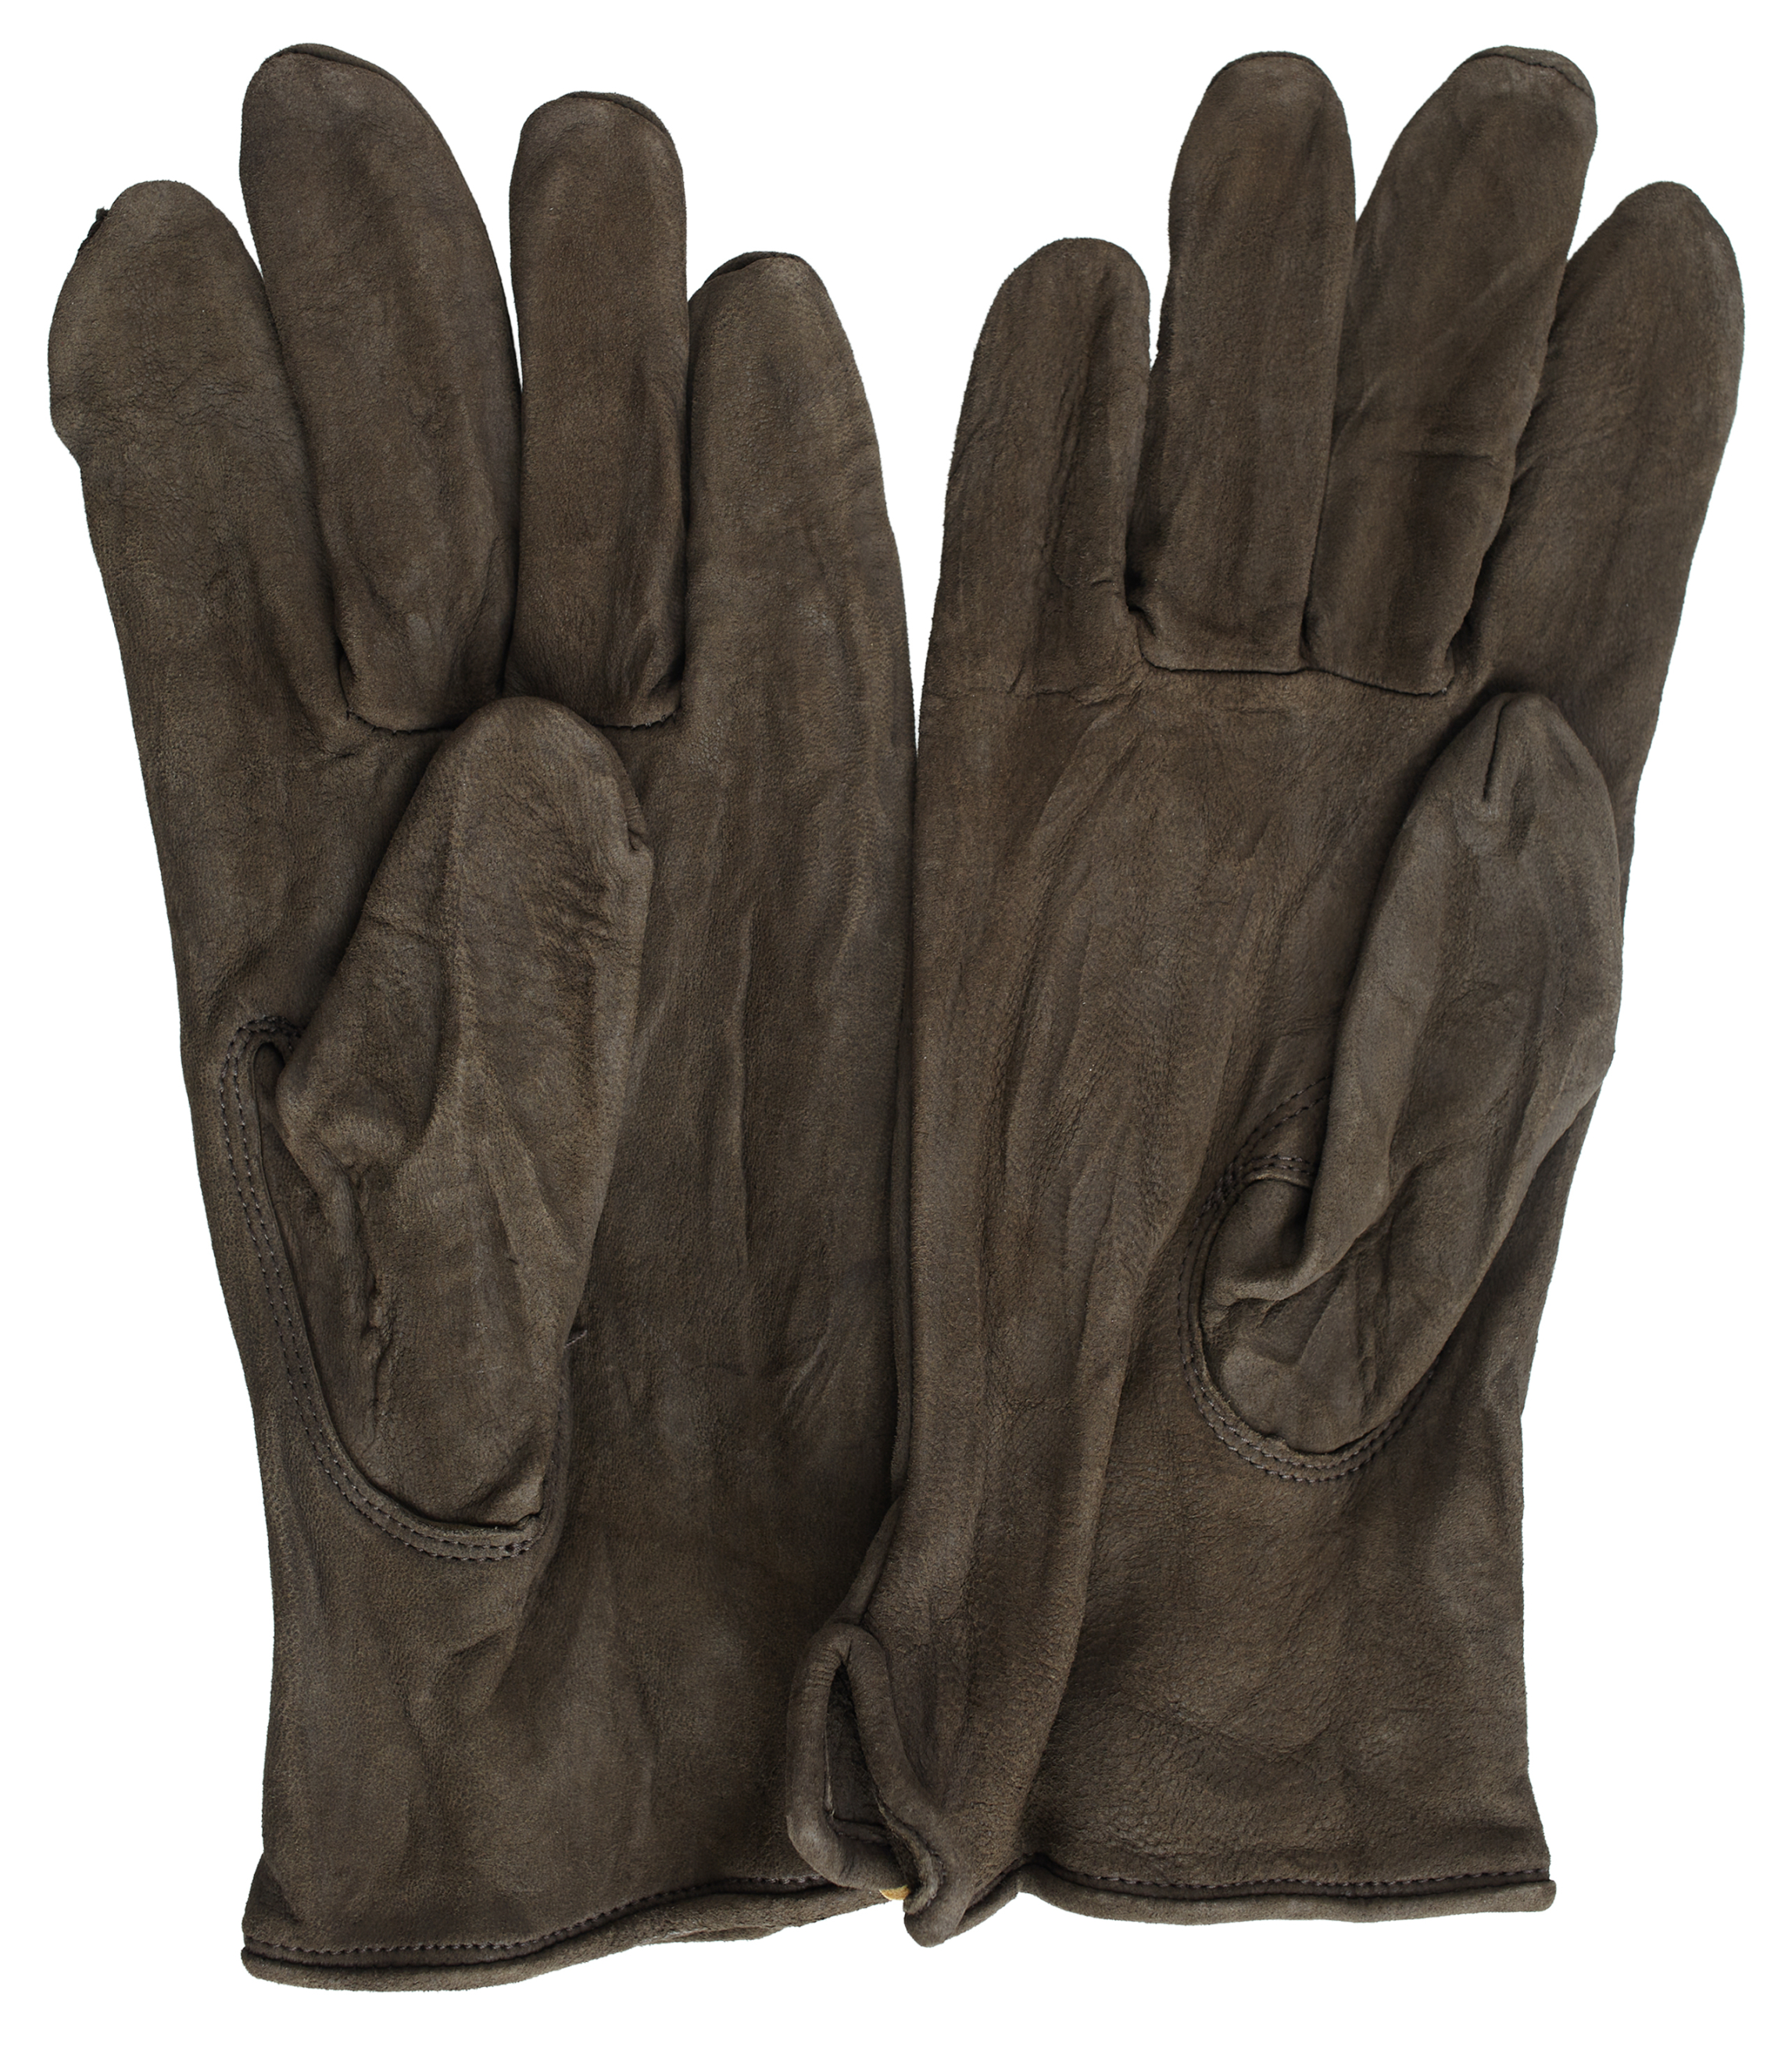 Коричневые замшевые перчатки visvim 0123203003008/DK.BROWN, размер M/L 0123203003008/DK.BROWN - фото 1